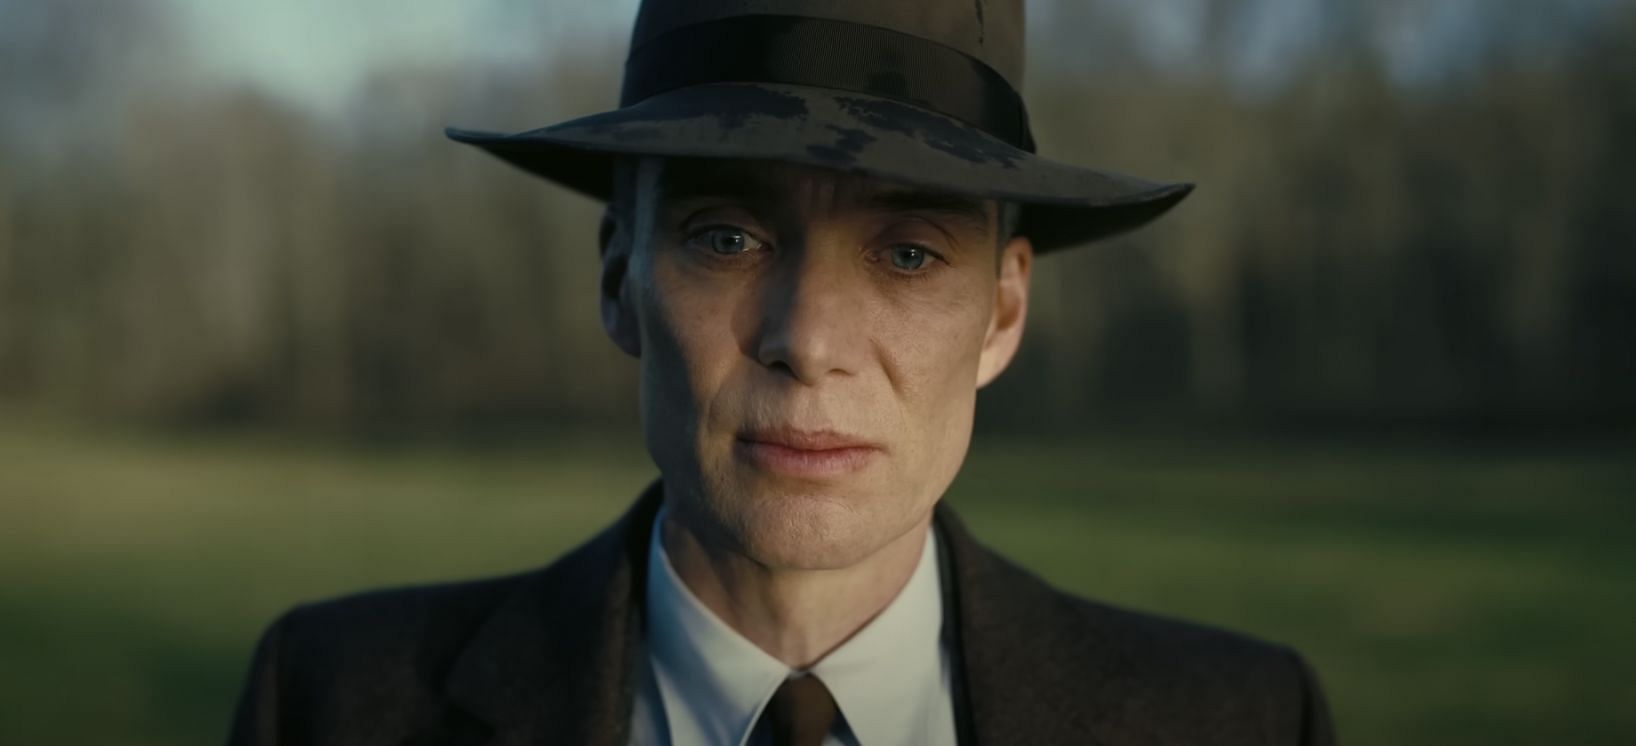 The impending role of Cillian Murphy as J. Robert Oppenheimer in Christopher Nolan